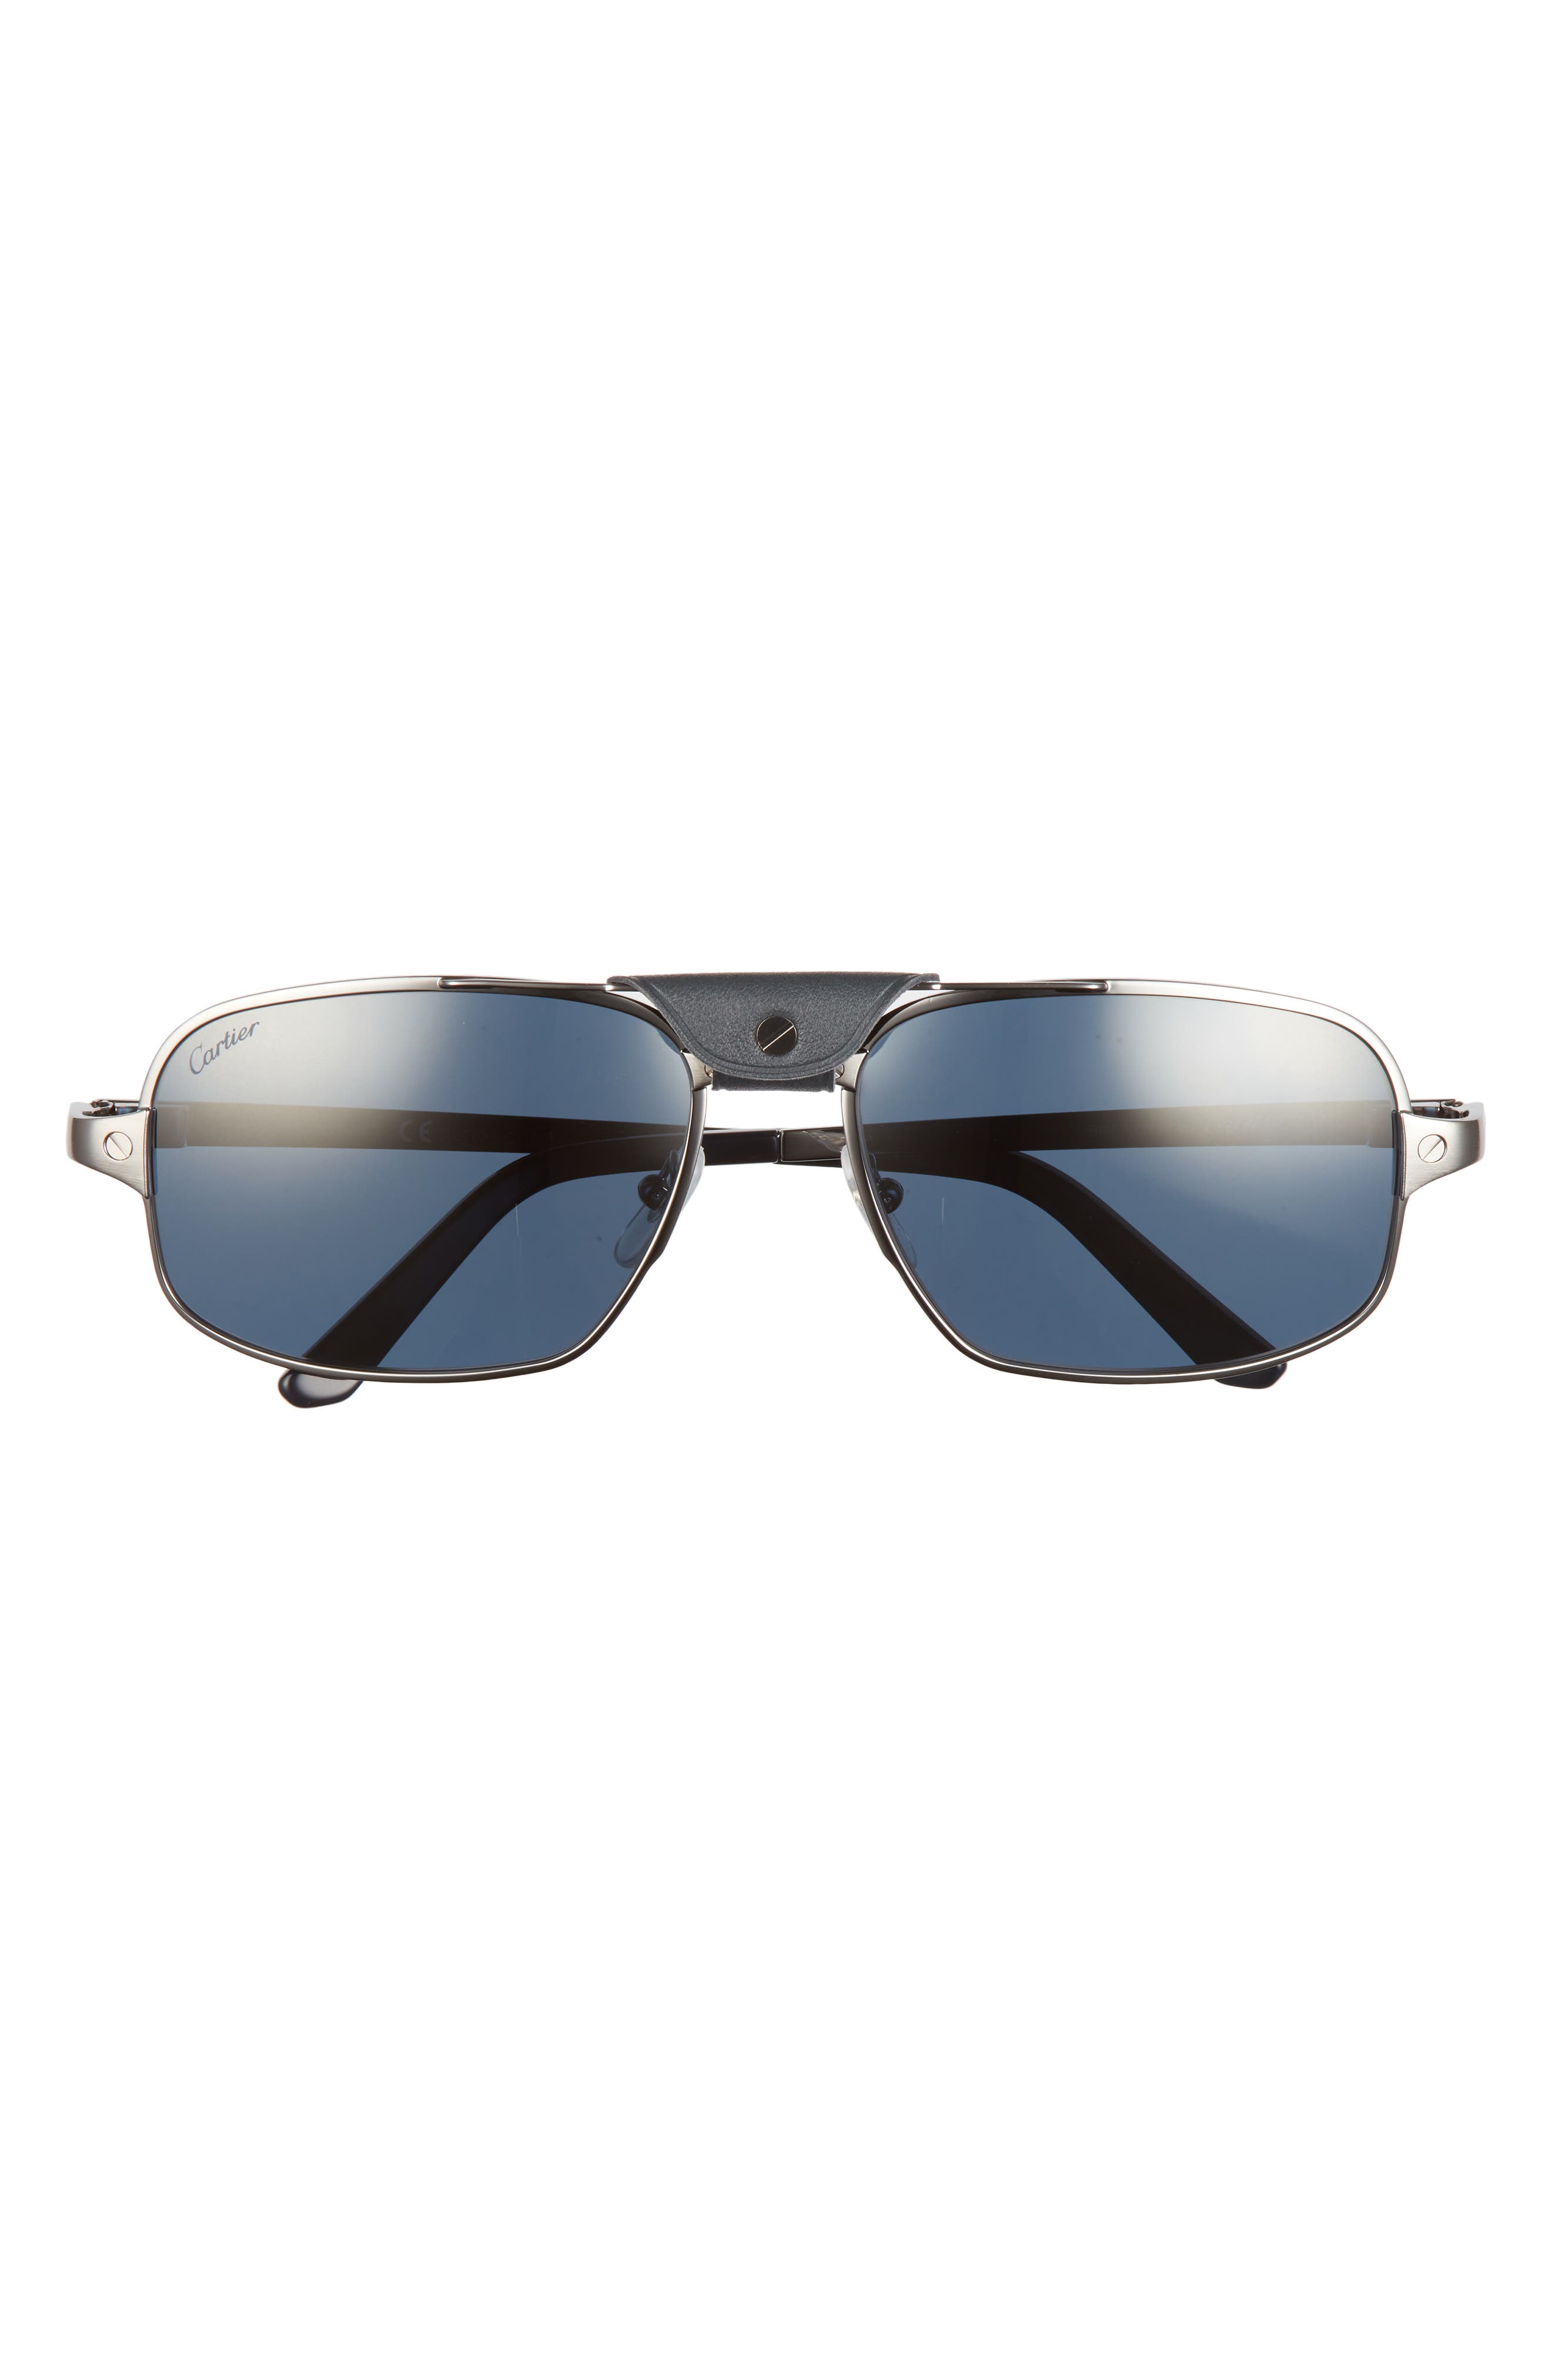 Cartier 60mm Aviator Sunglasses in Ruthenium at Nordstrom